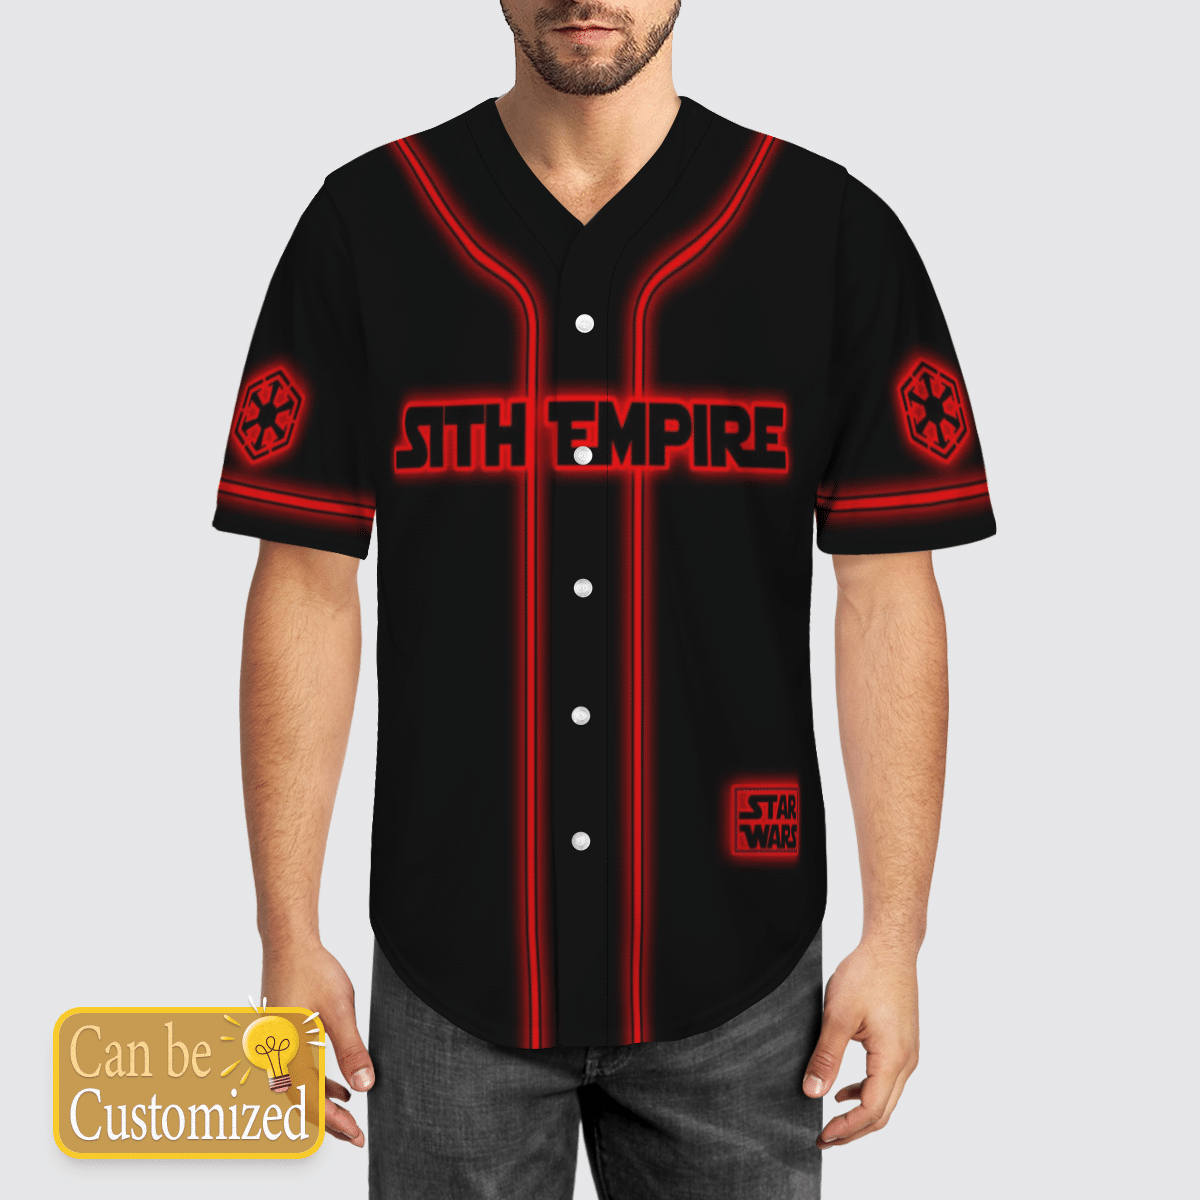 Sith Empire custom name baseball shirt 2